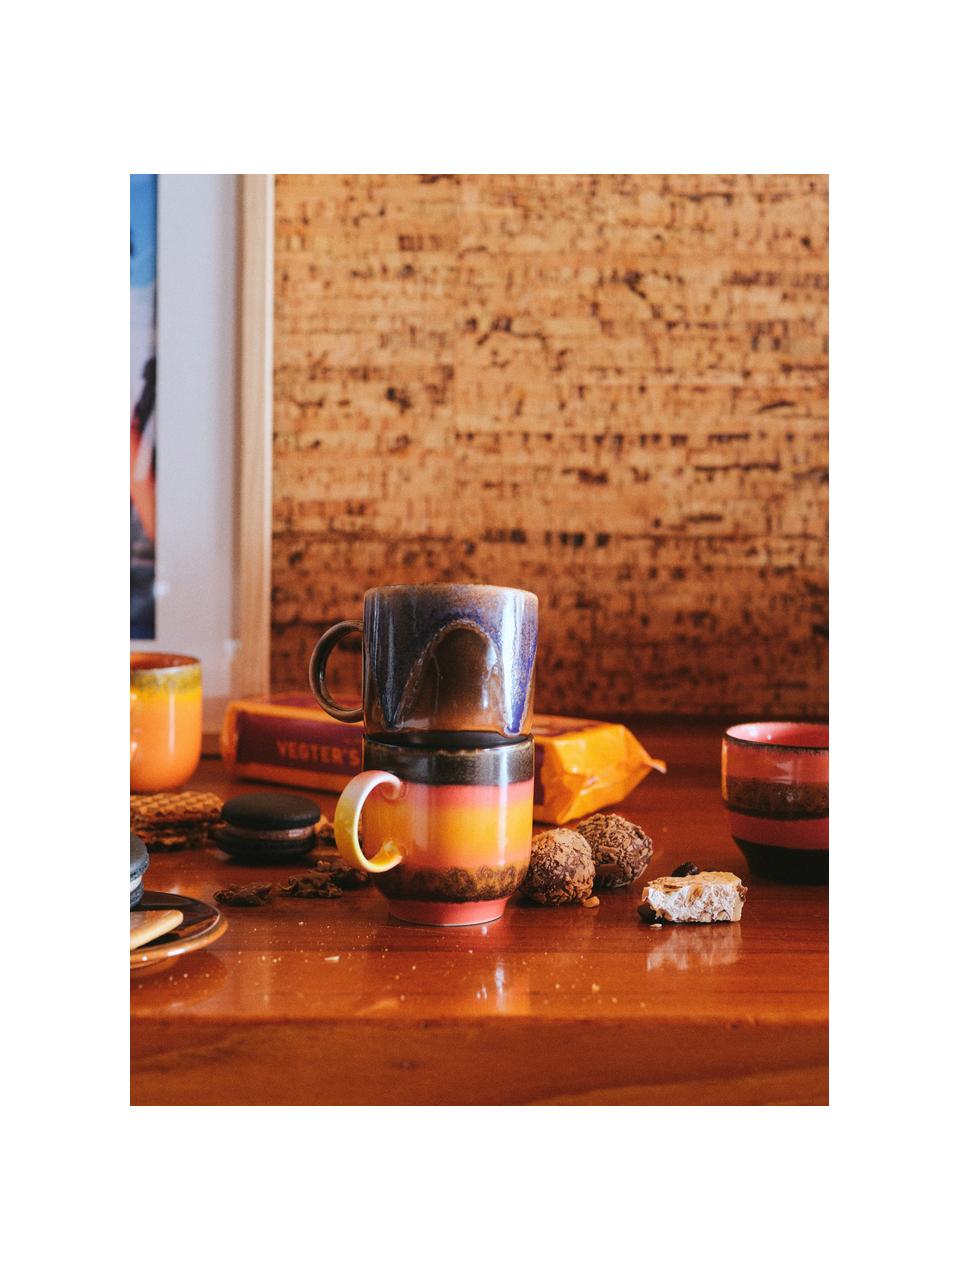 Set de tazas artesanales de cerámica 70's, 4 uds., Cerámica, Multicolor, Ø 11 x Al 8 cm, 230 ml